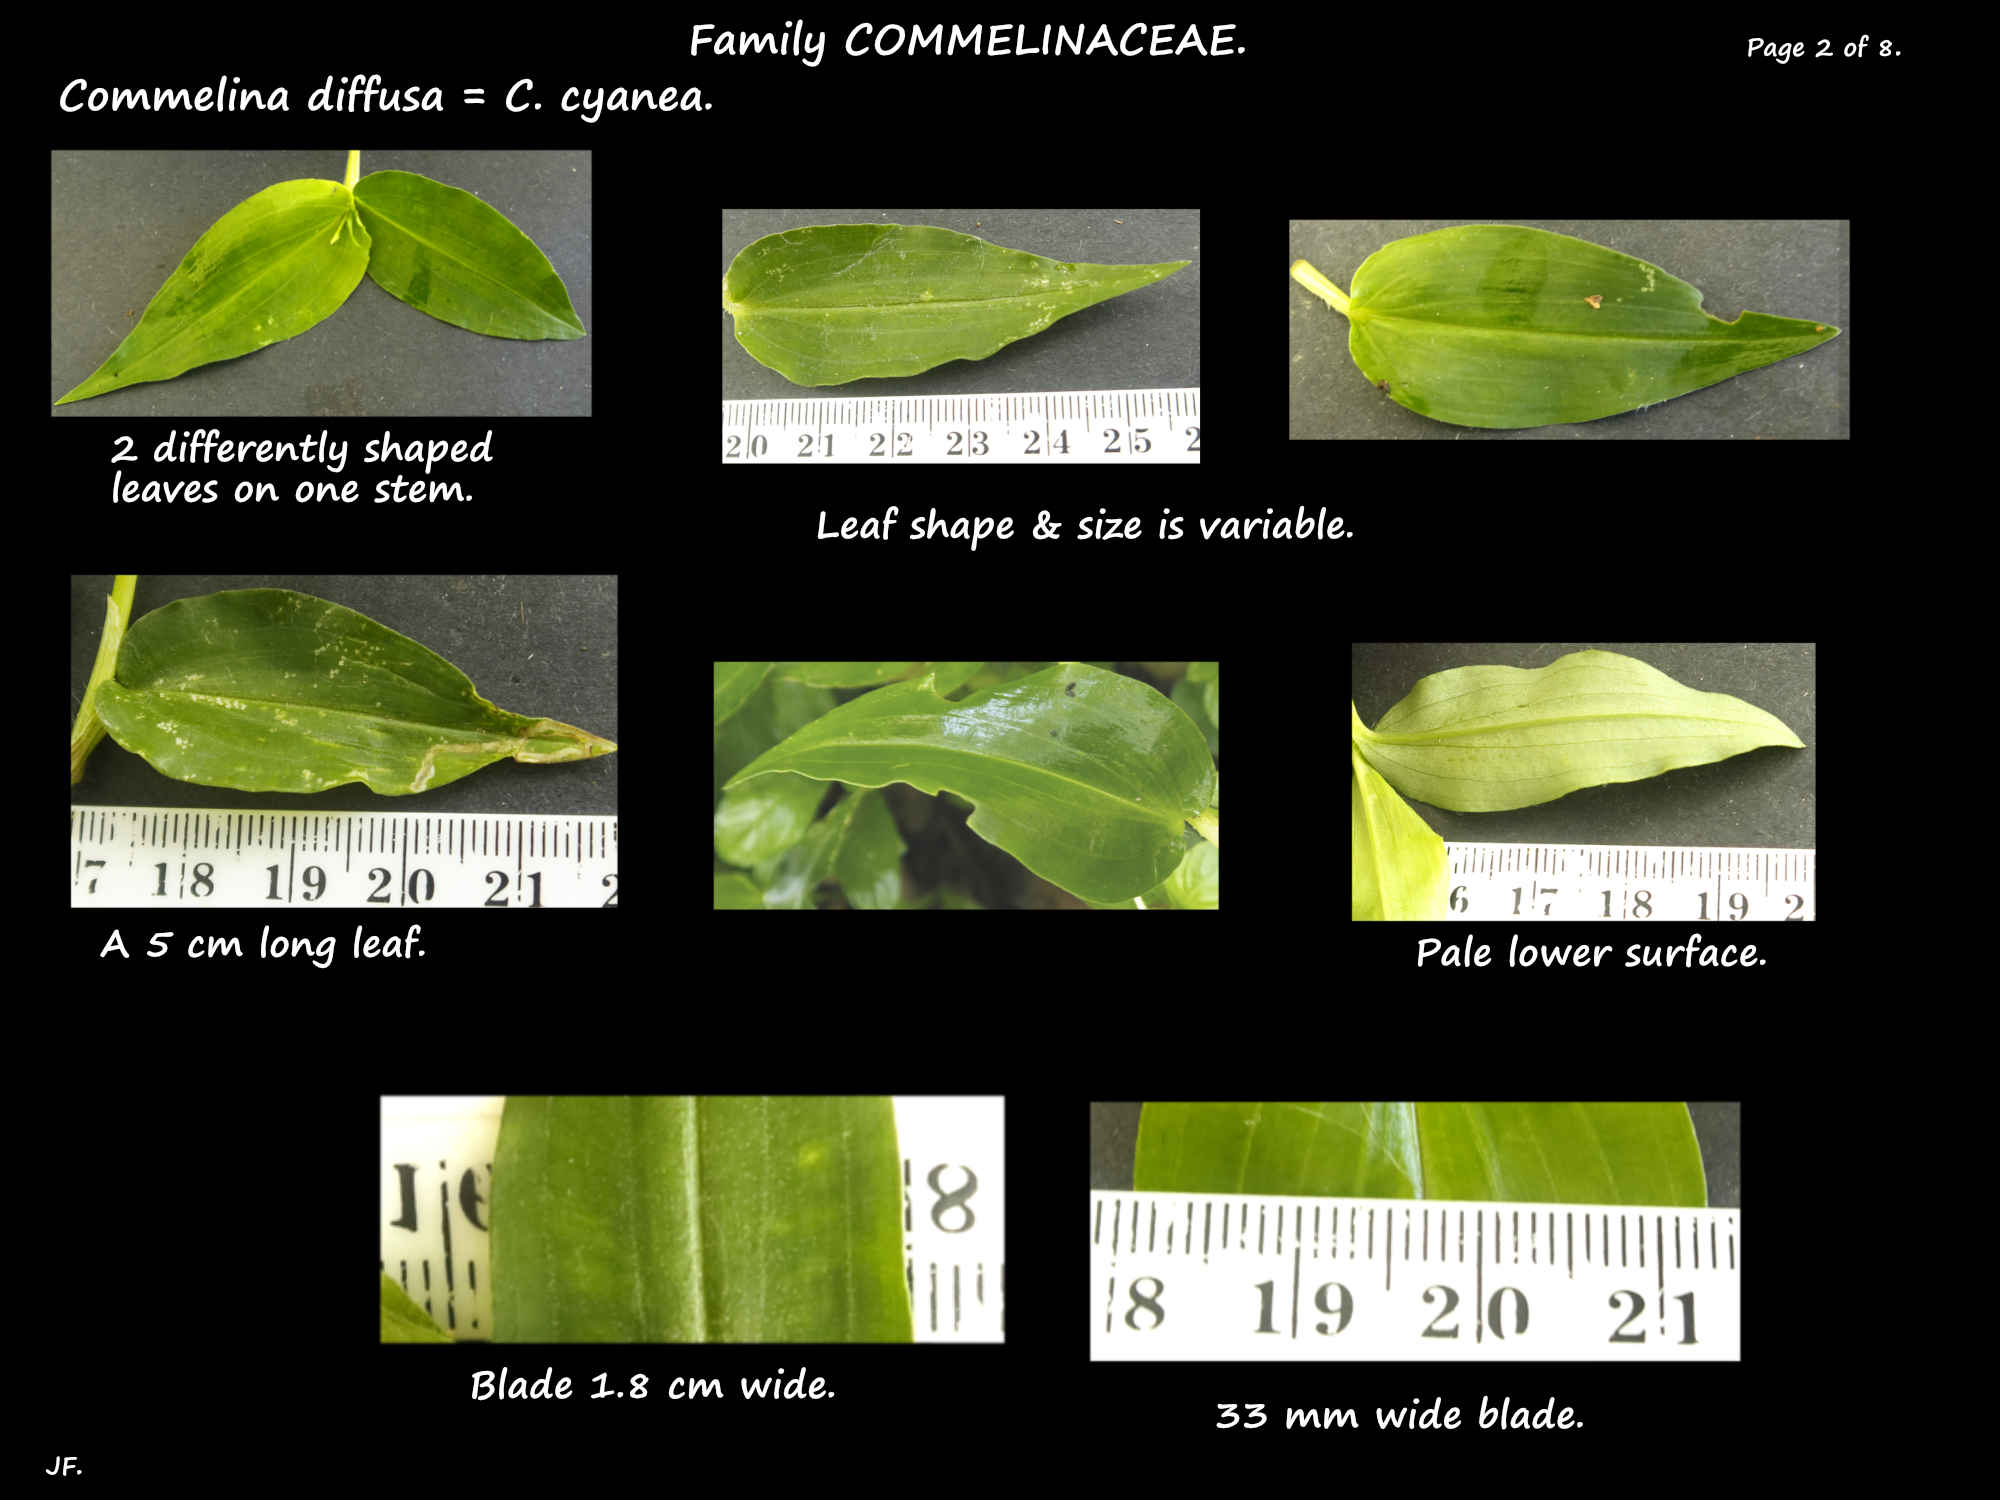 2 Commelina cyanea leaves